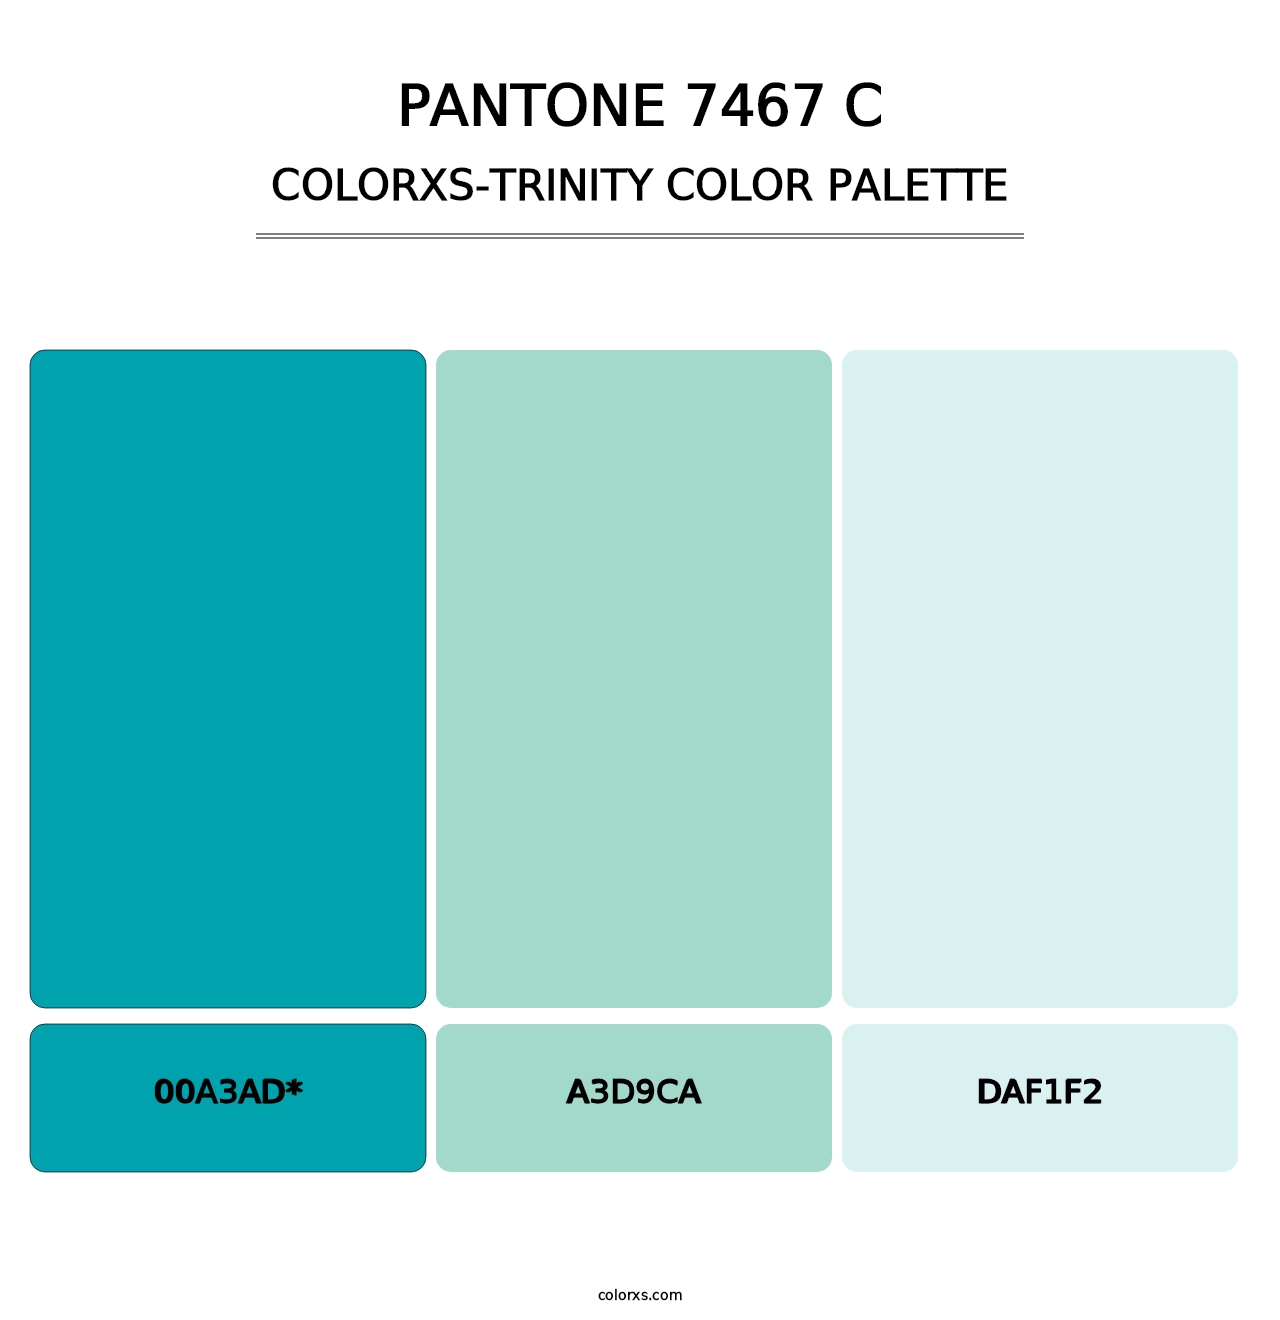 PANTONE 7467 C - Colorxs Trinity Palette